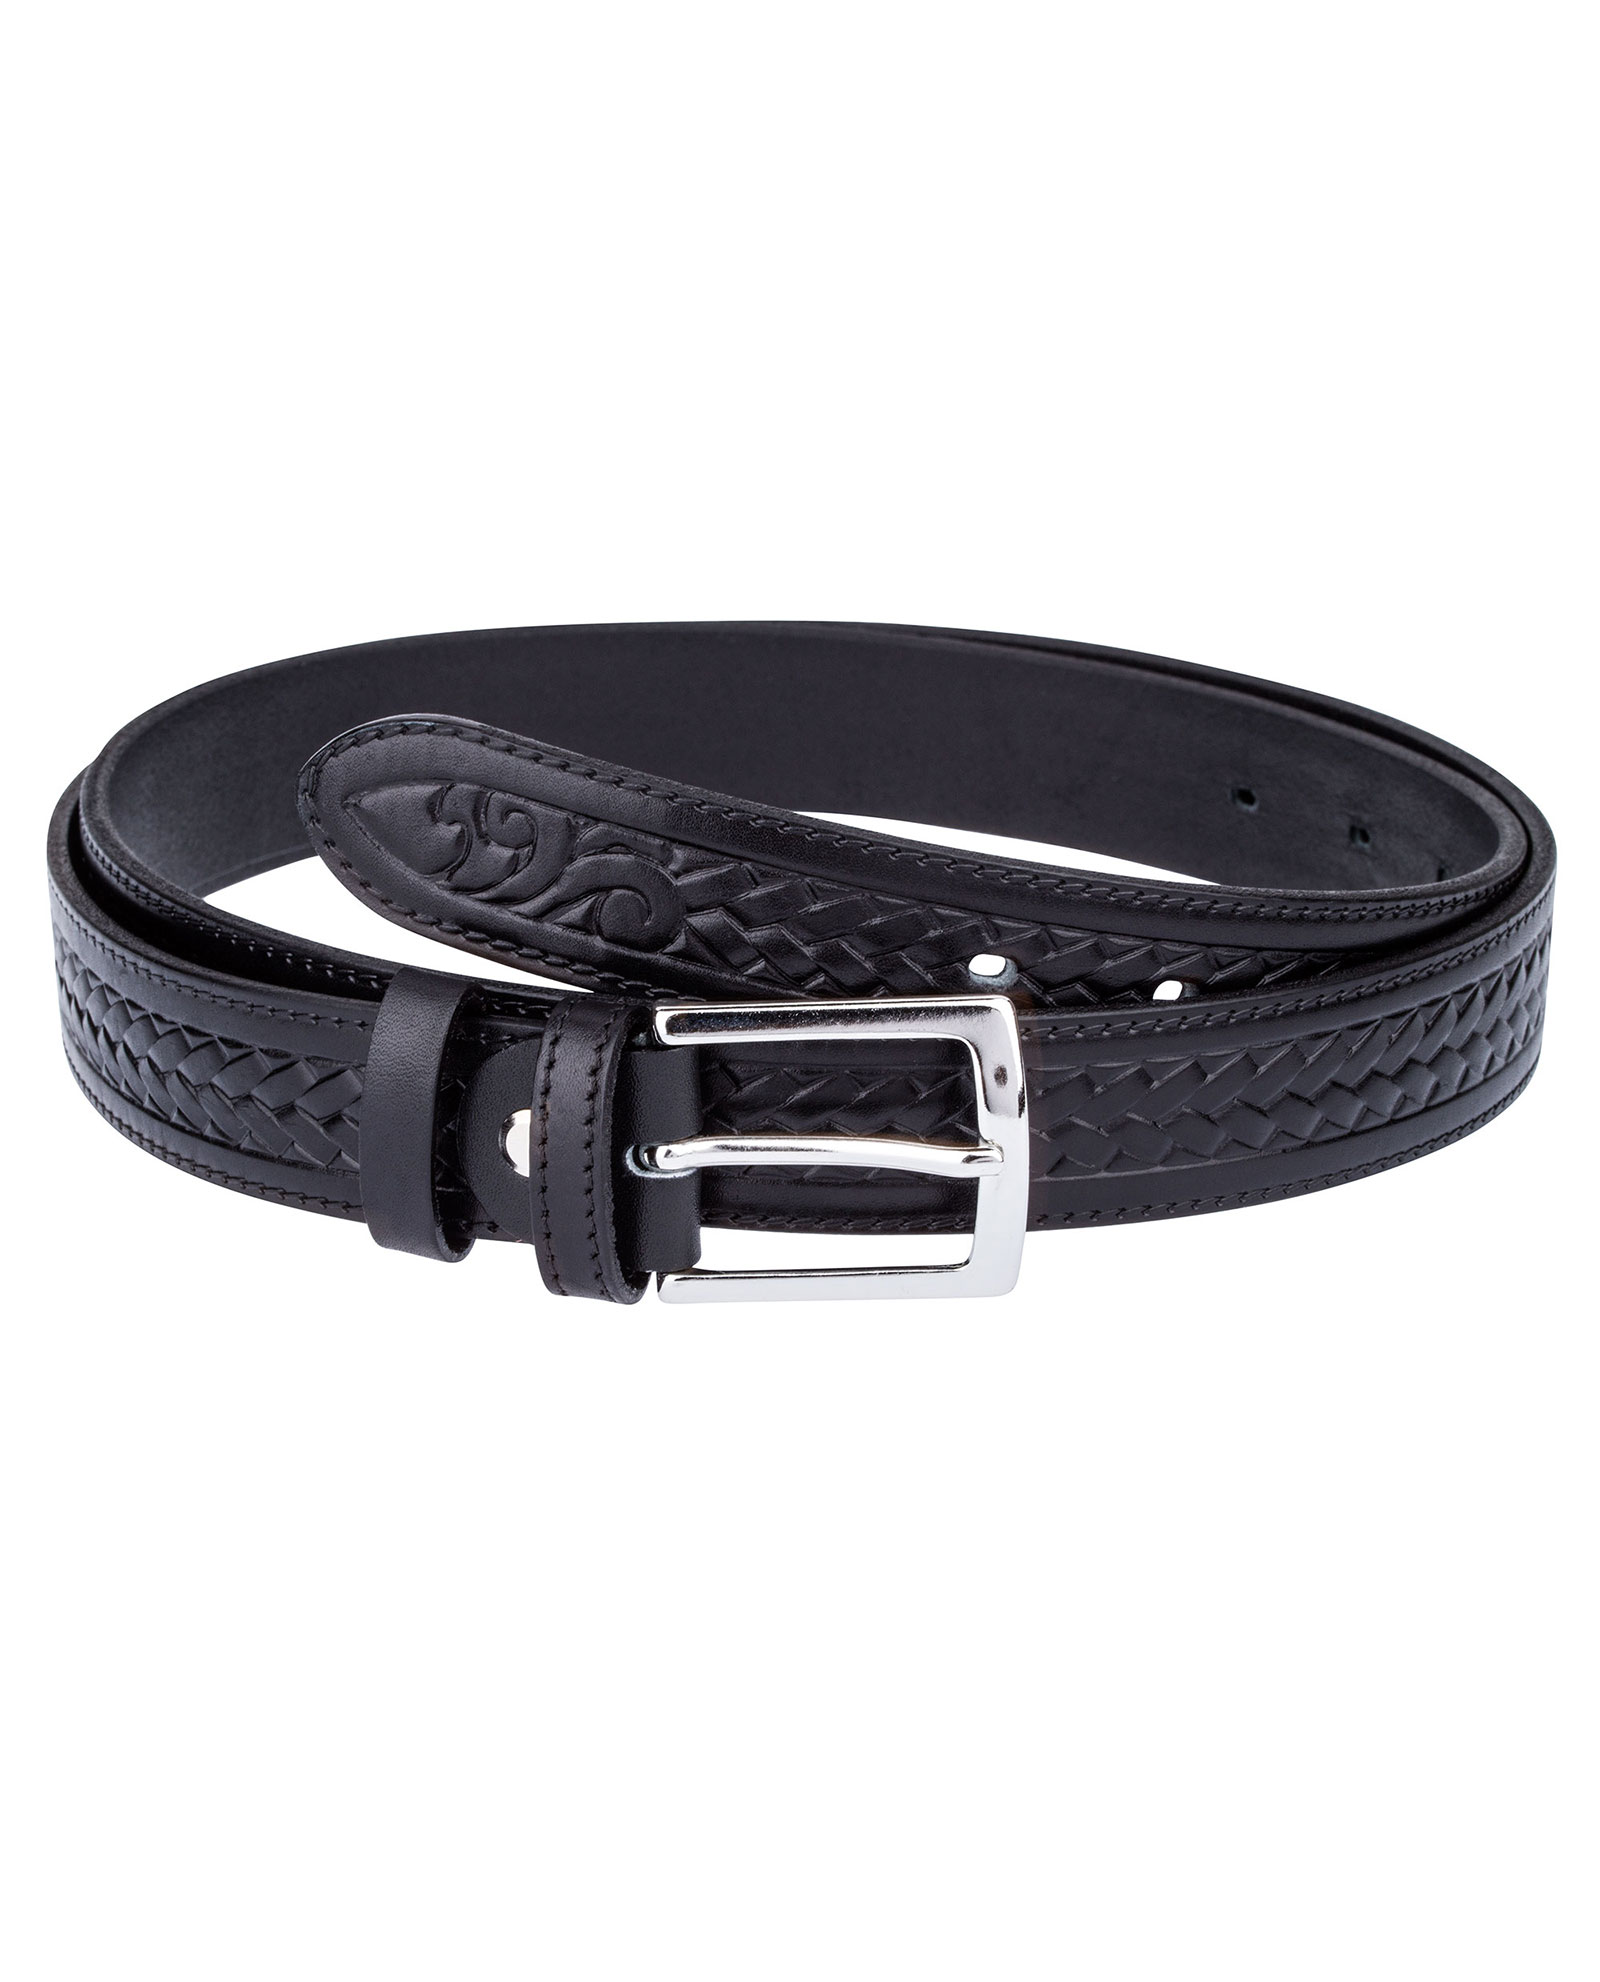 Buy Black Men's Leather Belt - Woven Embossed - Free Shipping